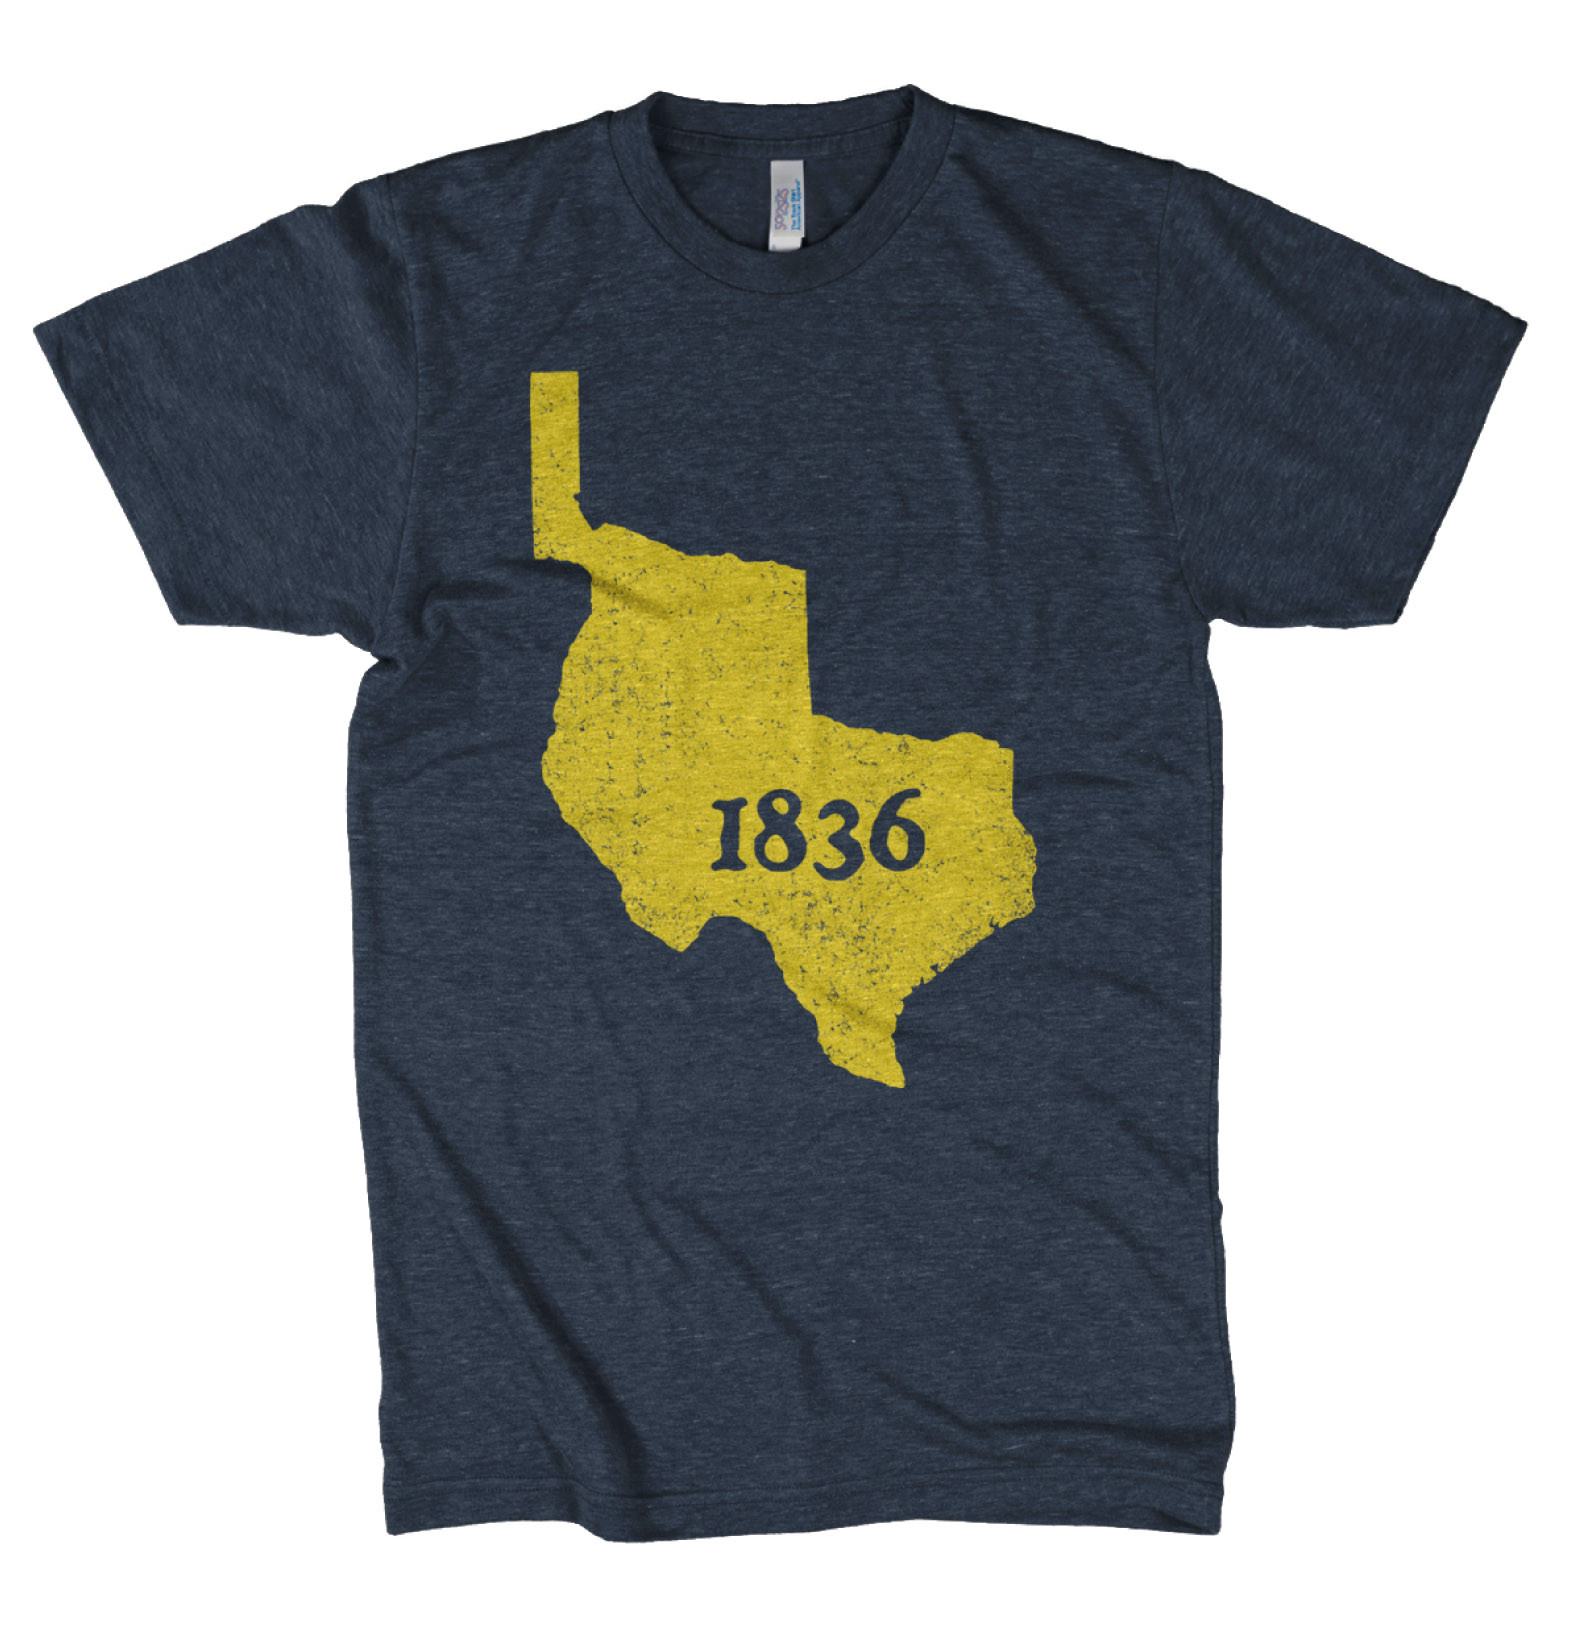 Tumbleweed TexStyles: The Texas T-shirt Tycoons â The Coolest Stuff in Texas